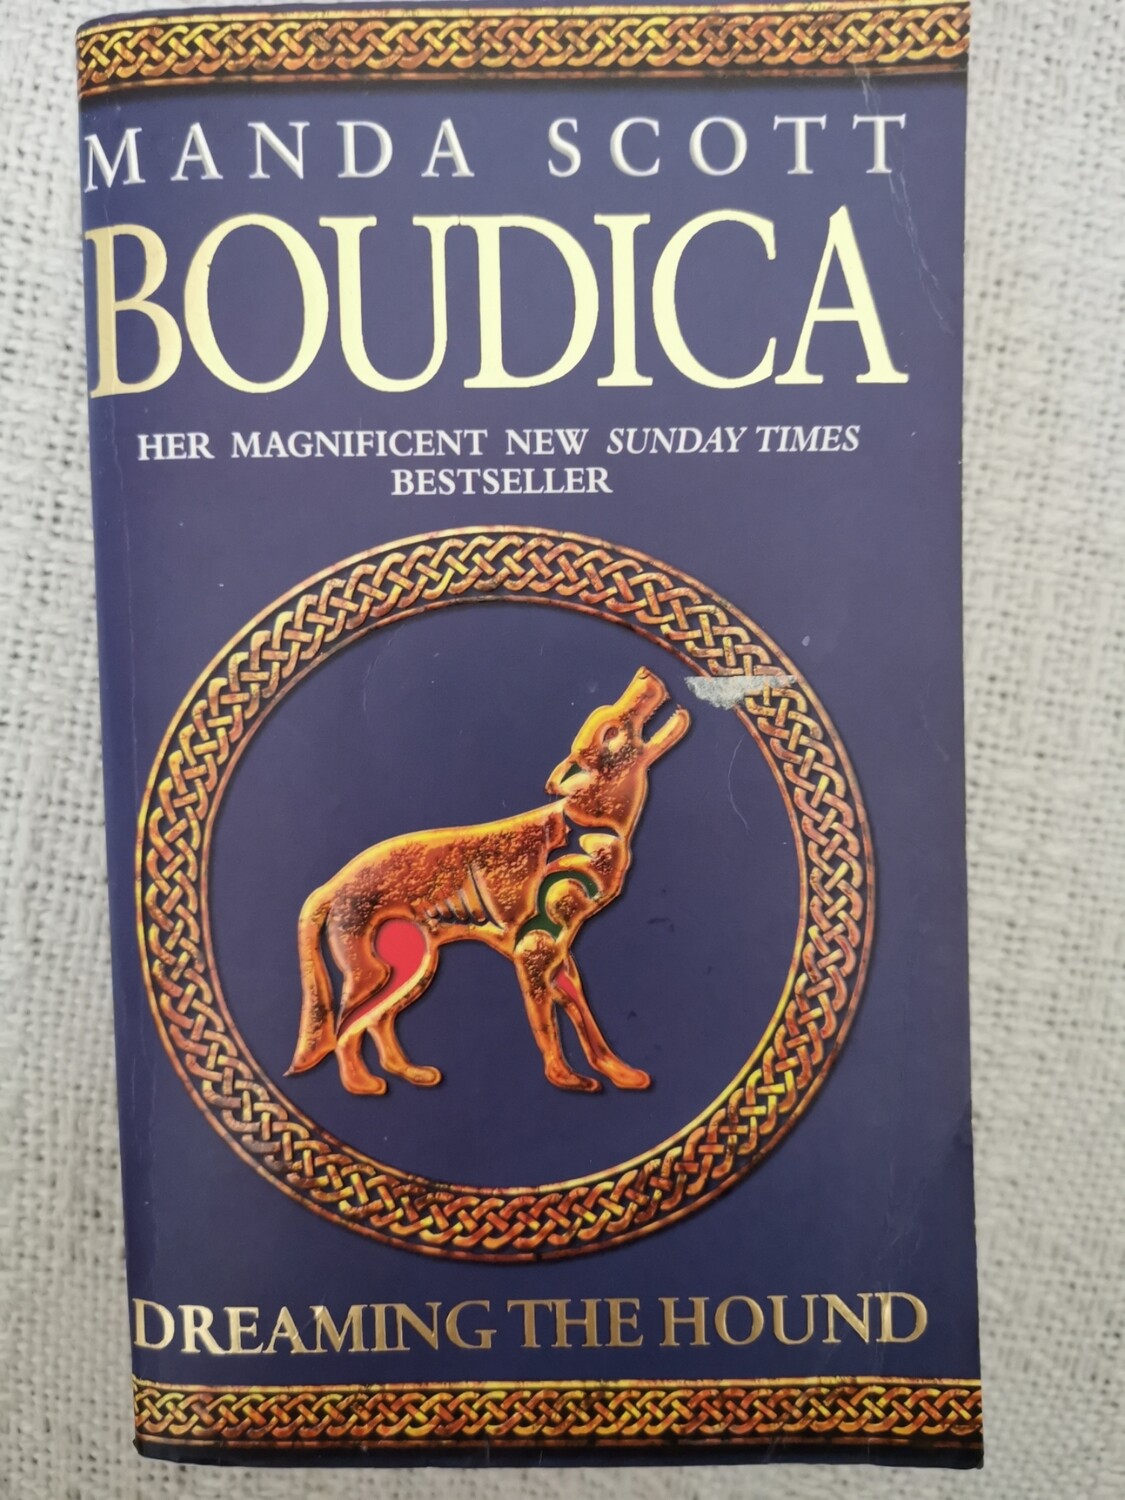 Boudica dreaming the hound, Manda Scott